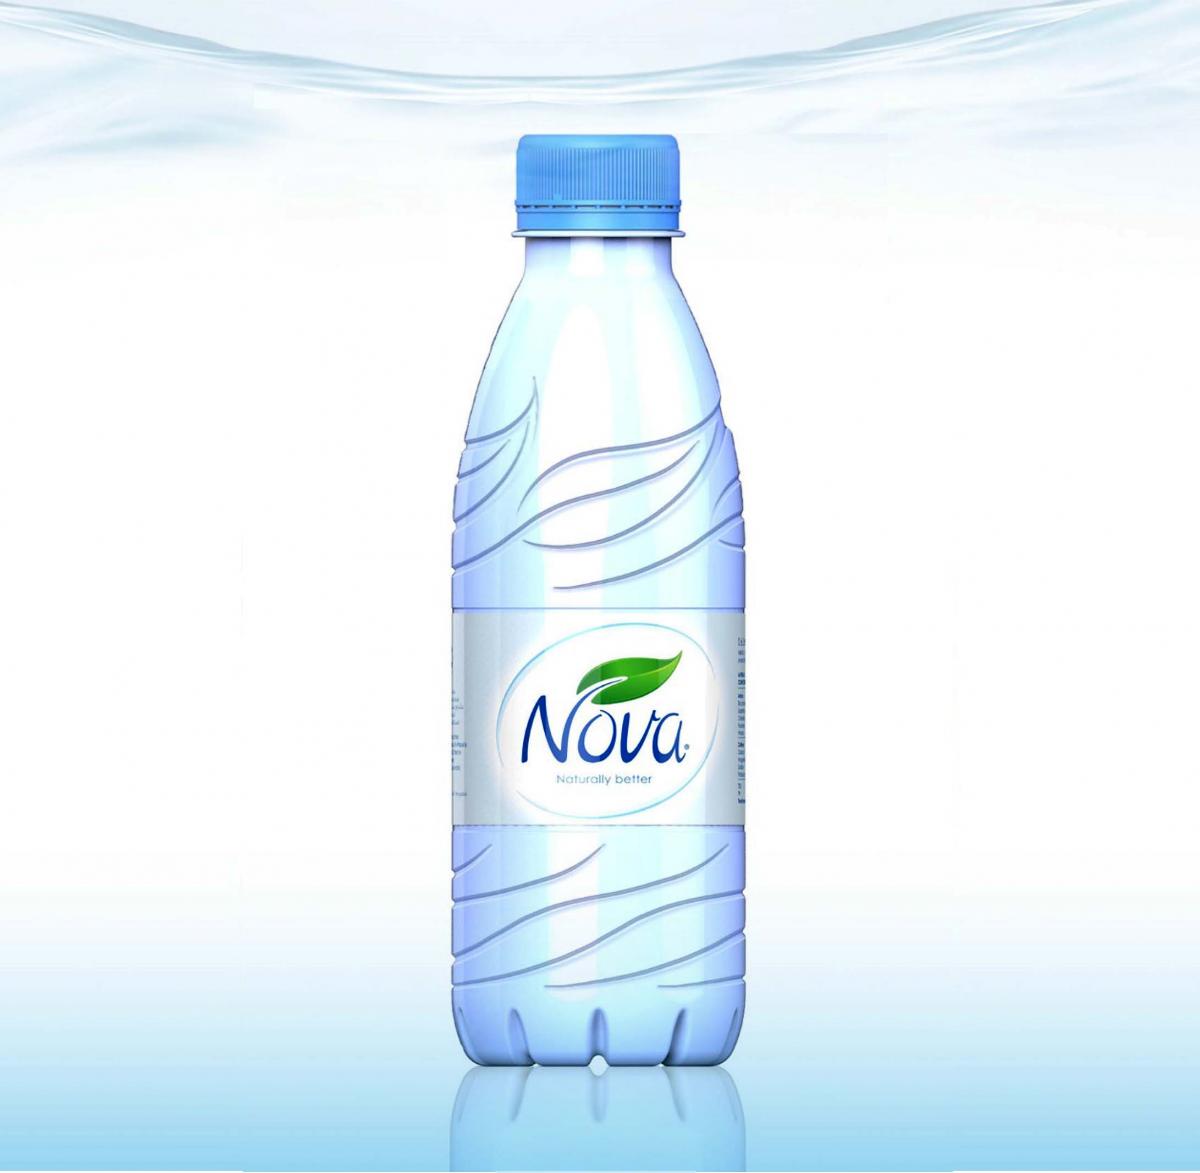 Nova brand of water in 330ml format